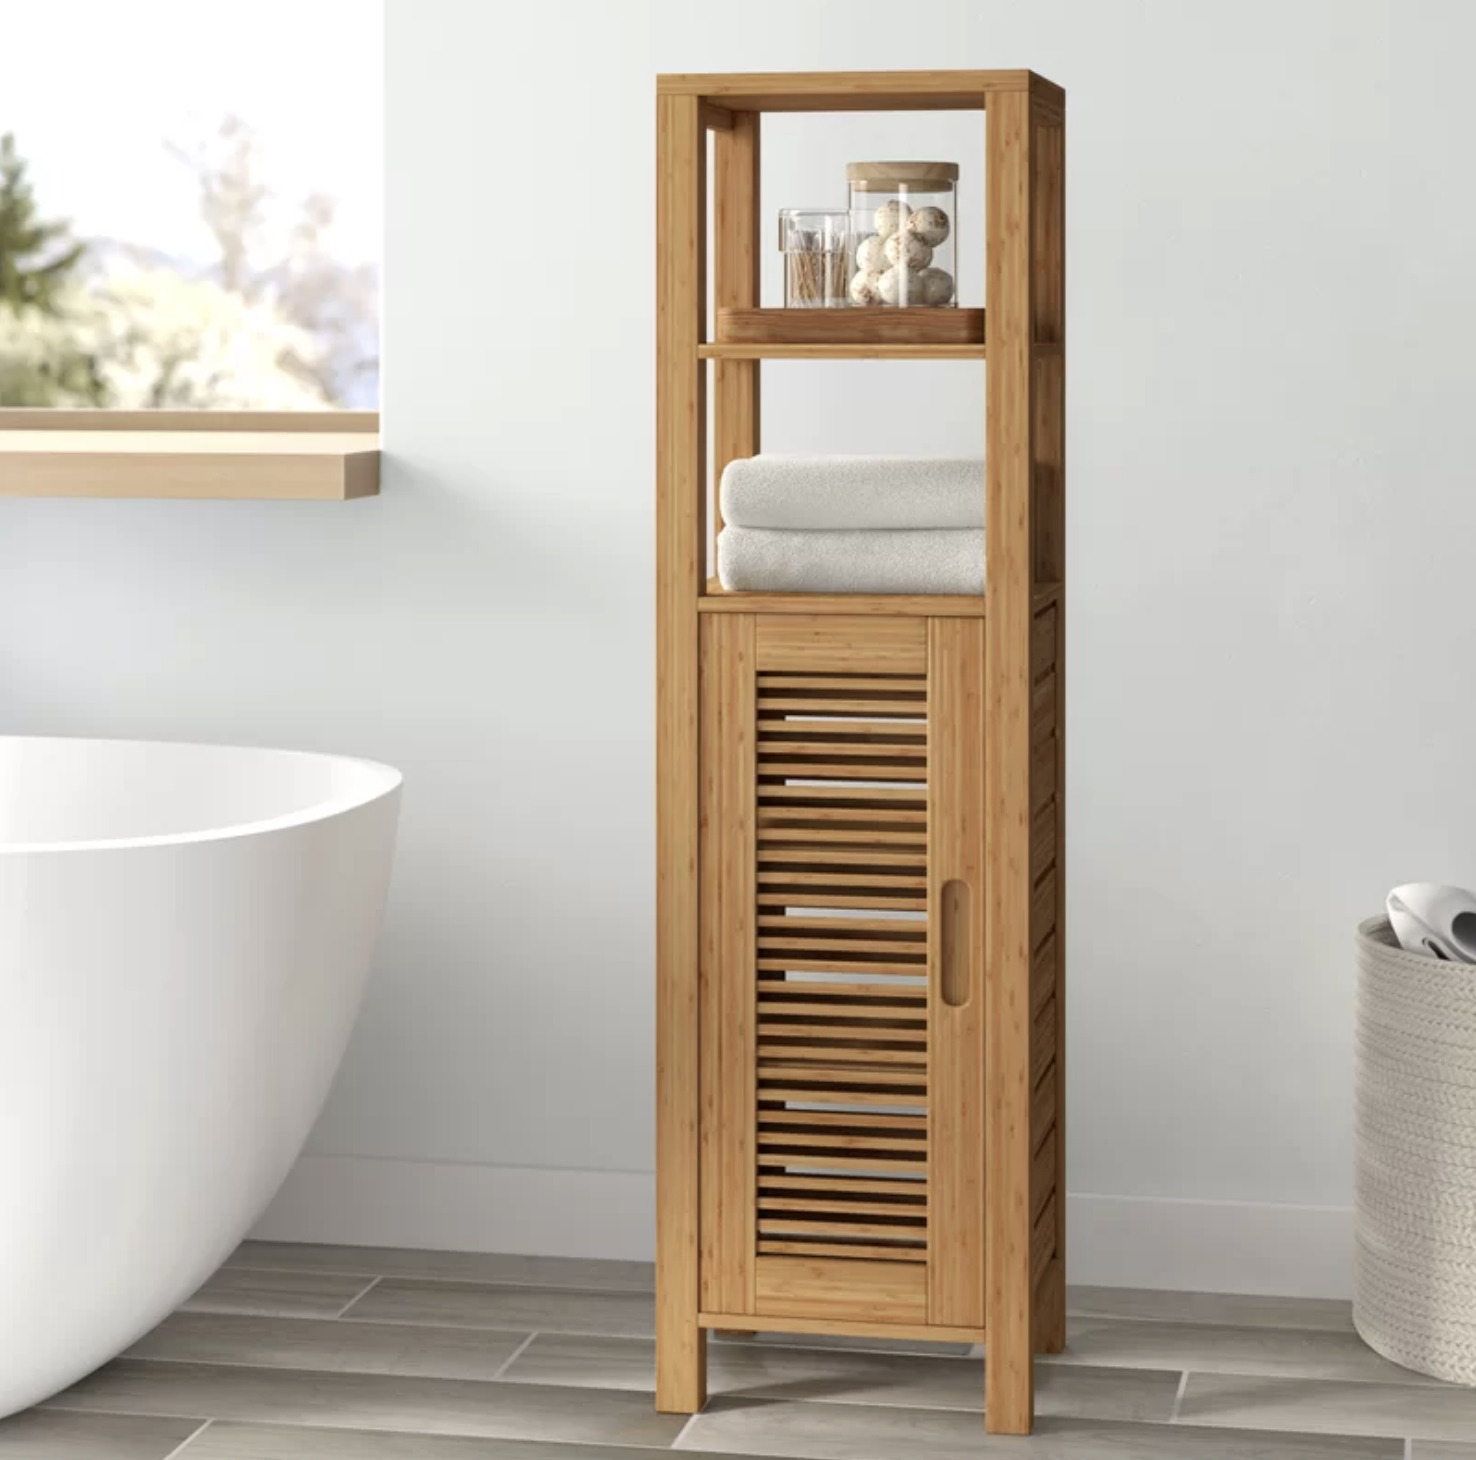 A bamboo bathroom cabinet